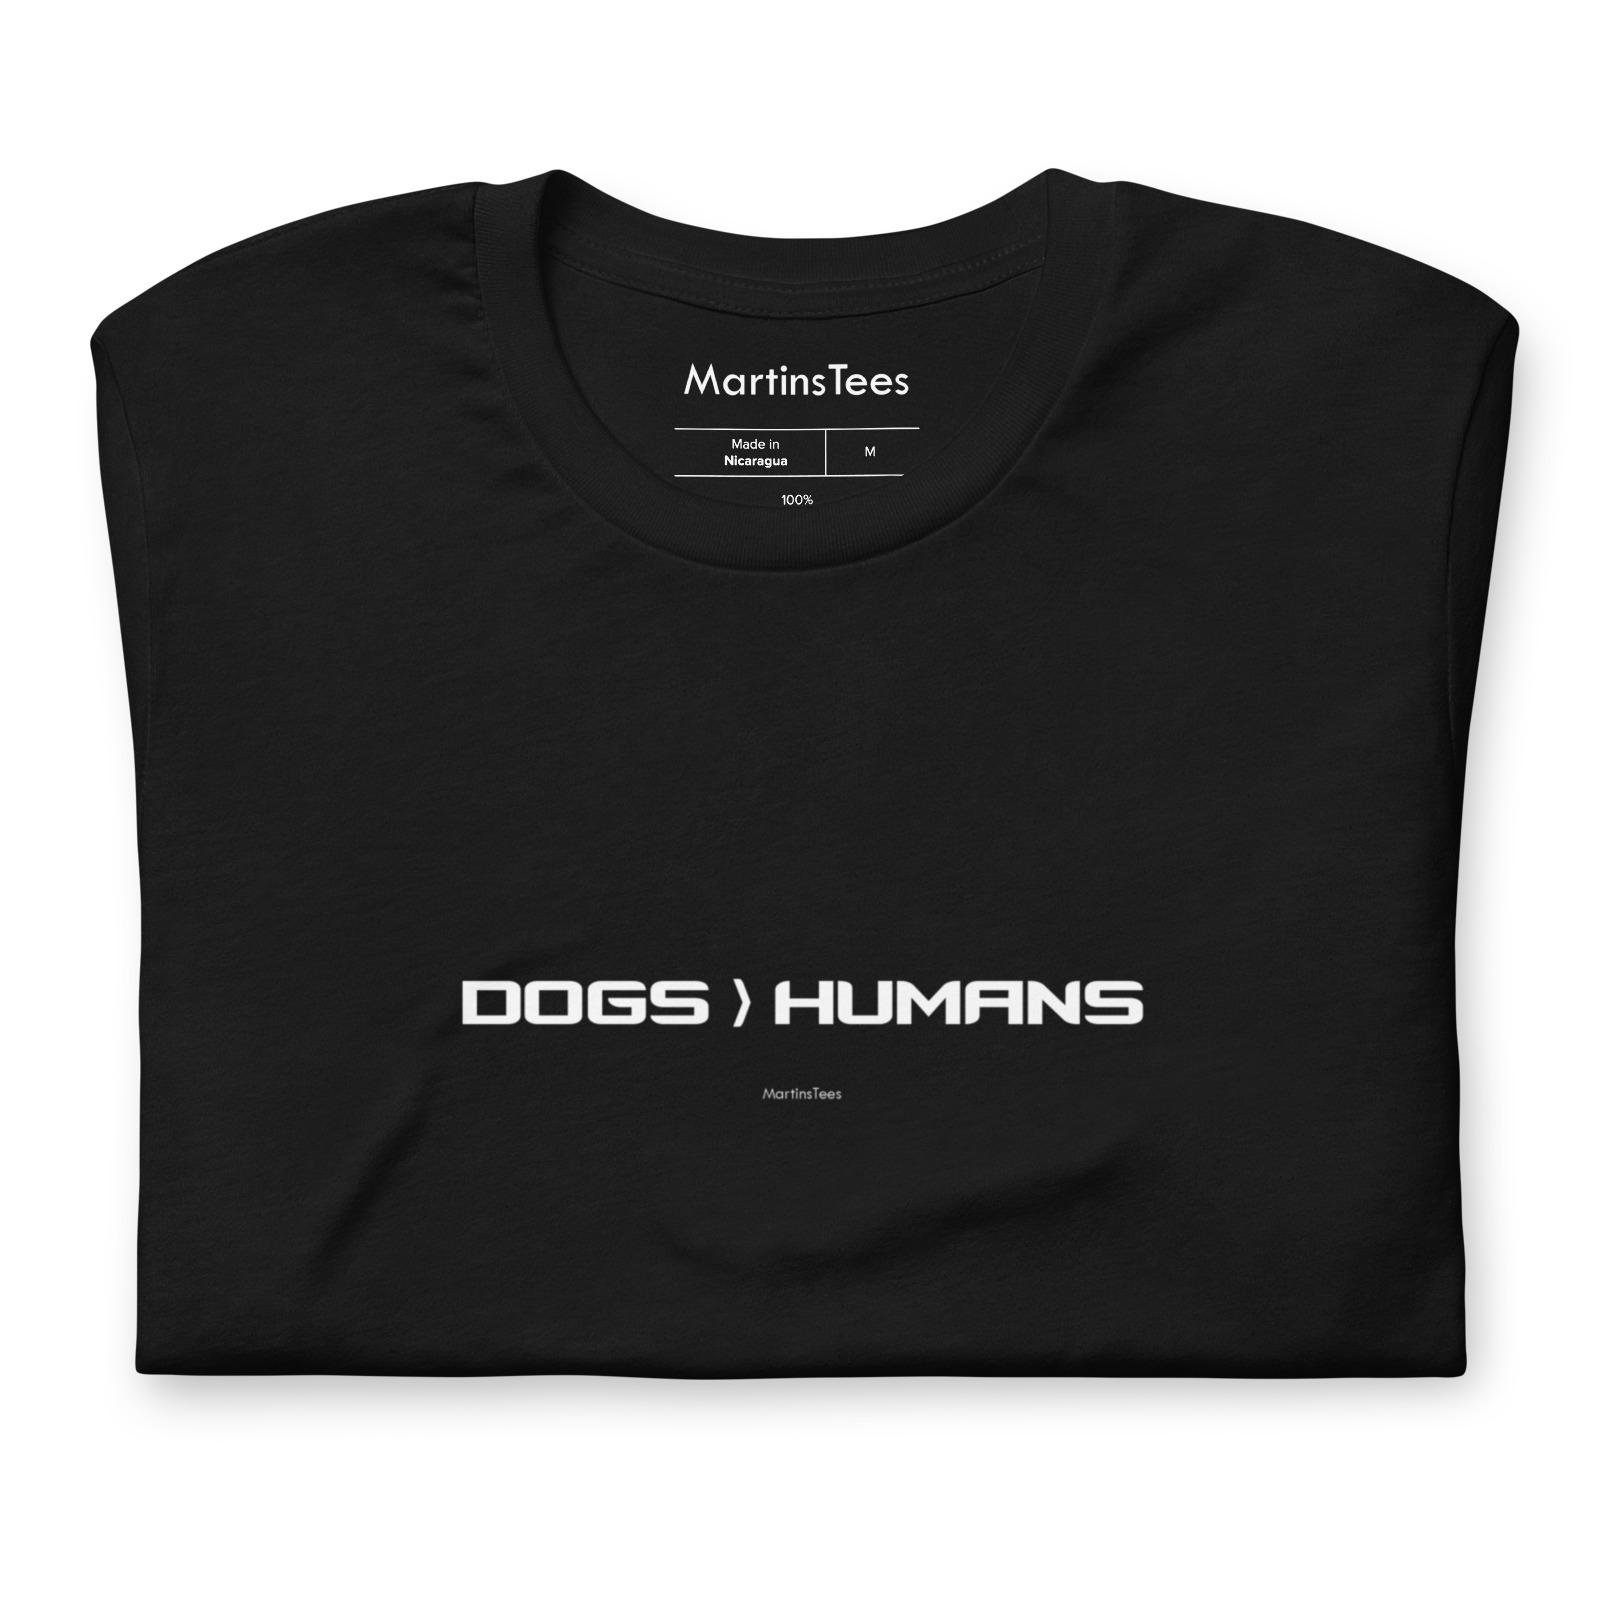 T-shirt: DOGS > HUMANS